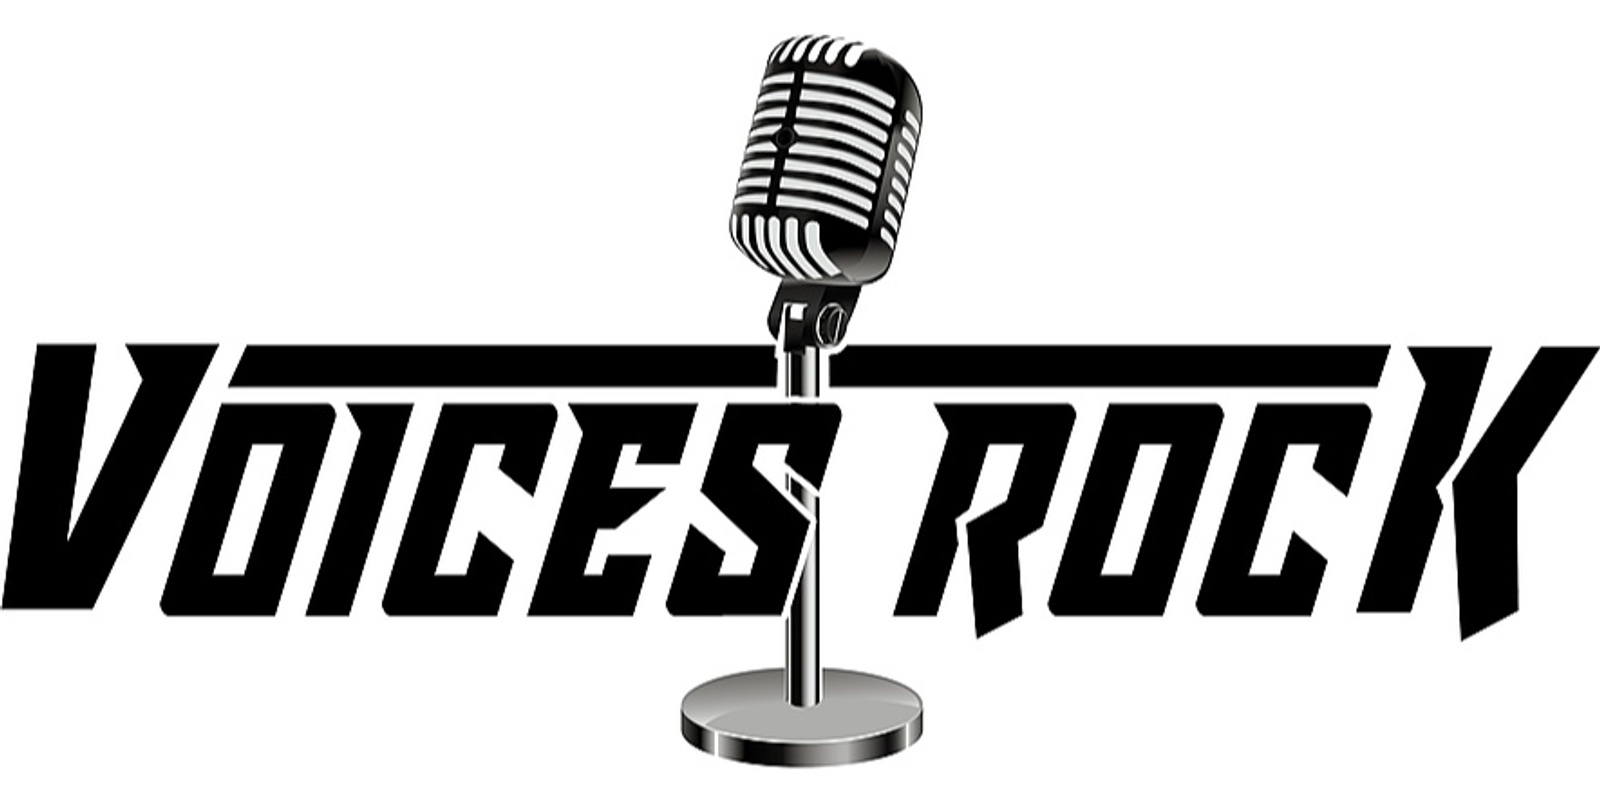 Banner image for Voices Rock/VR2 Winter Concert